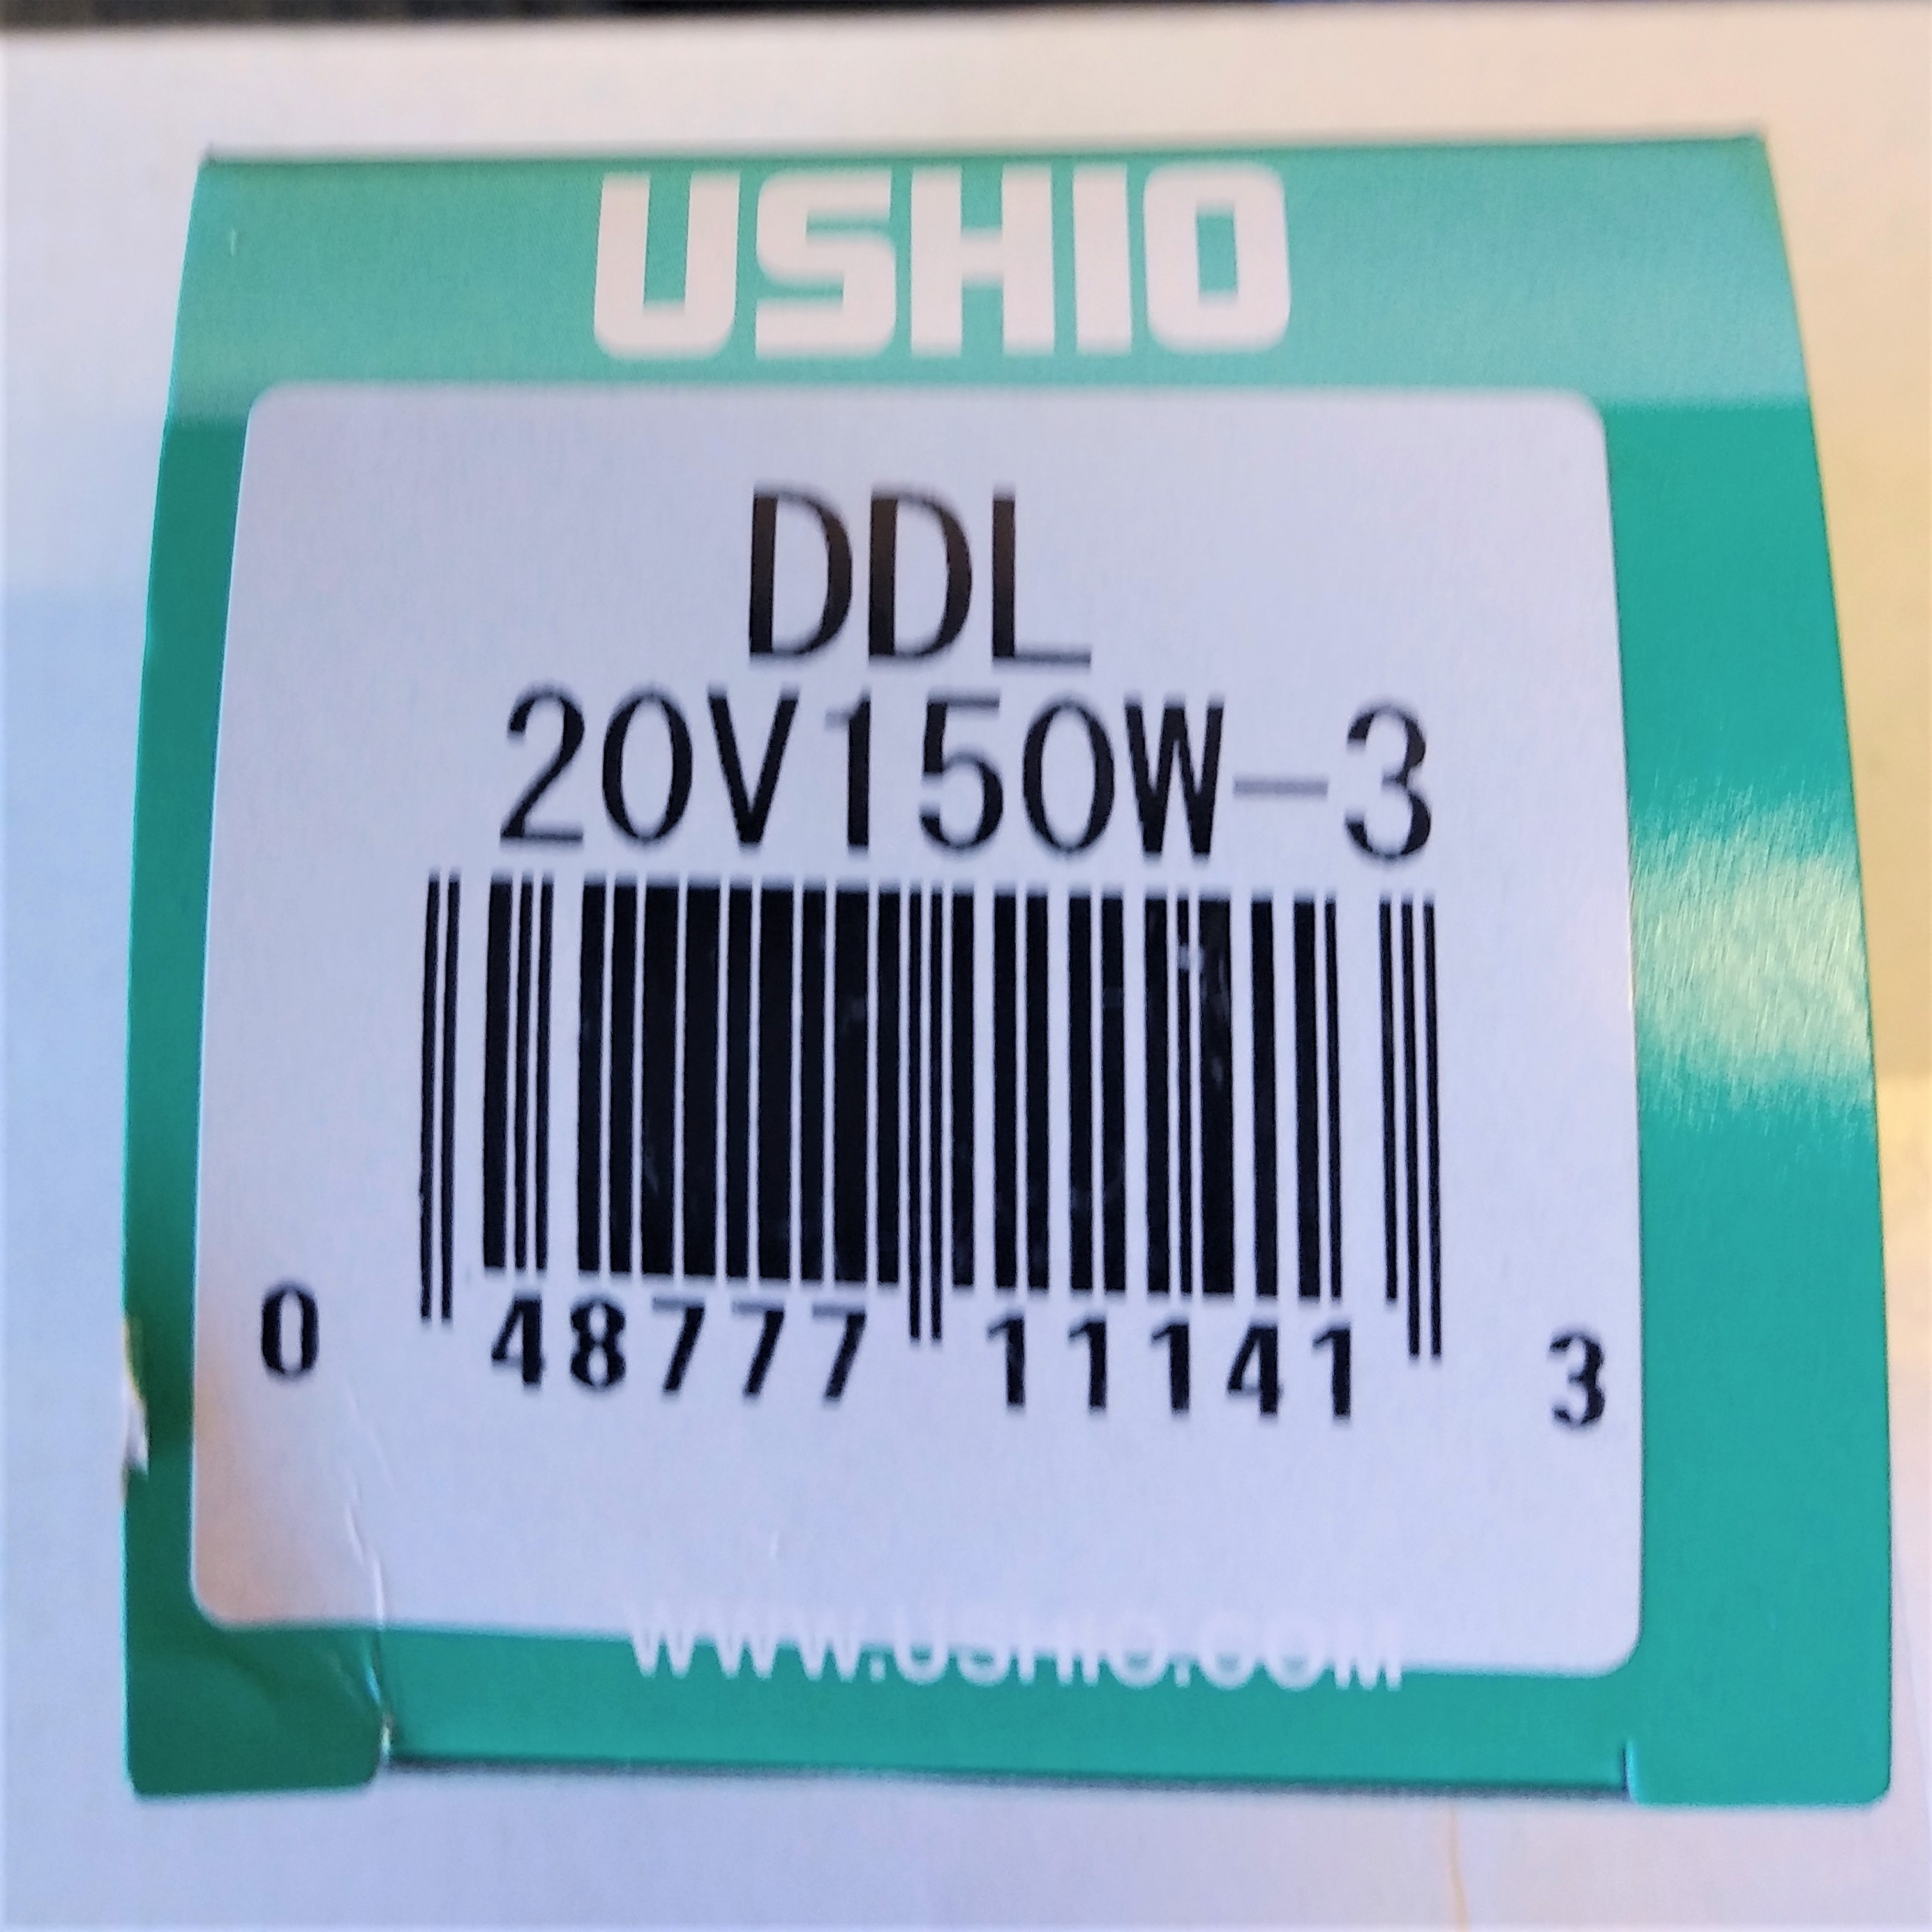 USHIO Halogen Reflector Lamp DDL 20V150W-3